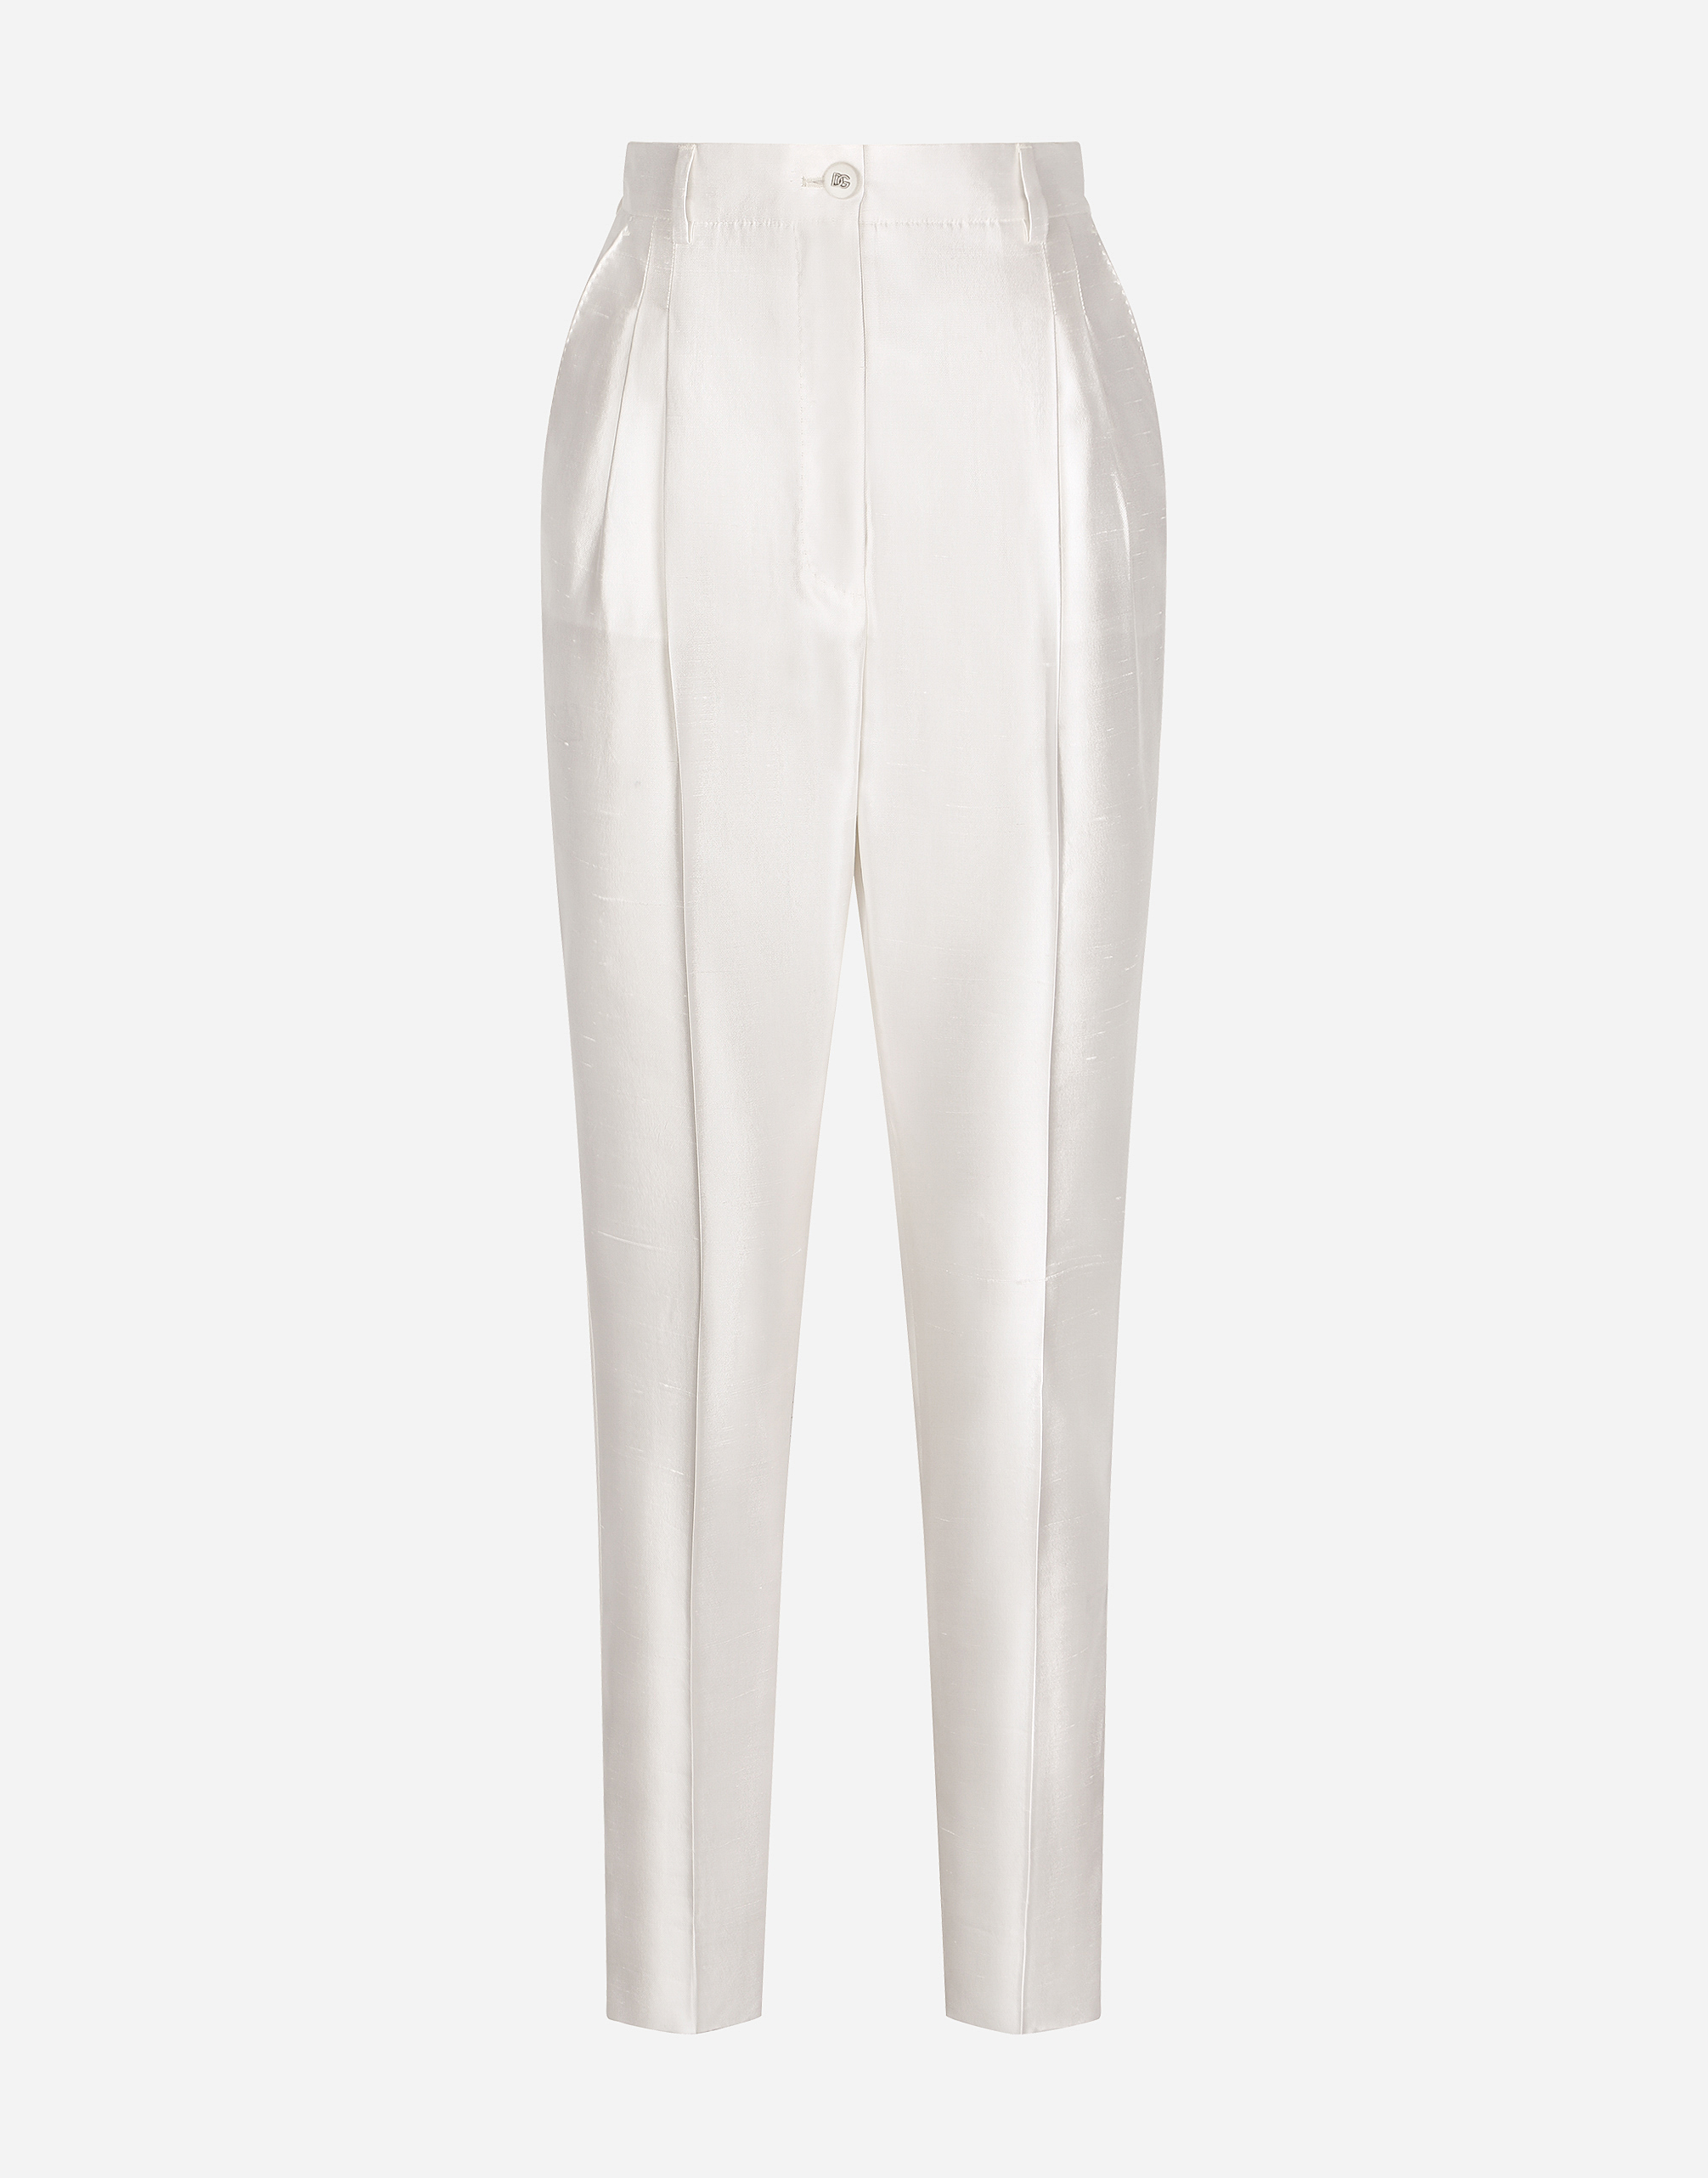 Shantung pants in White